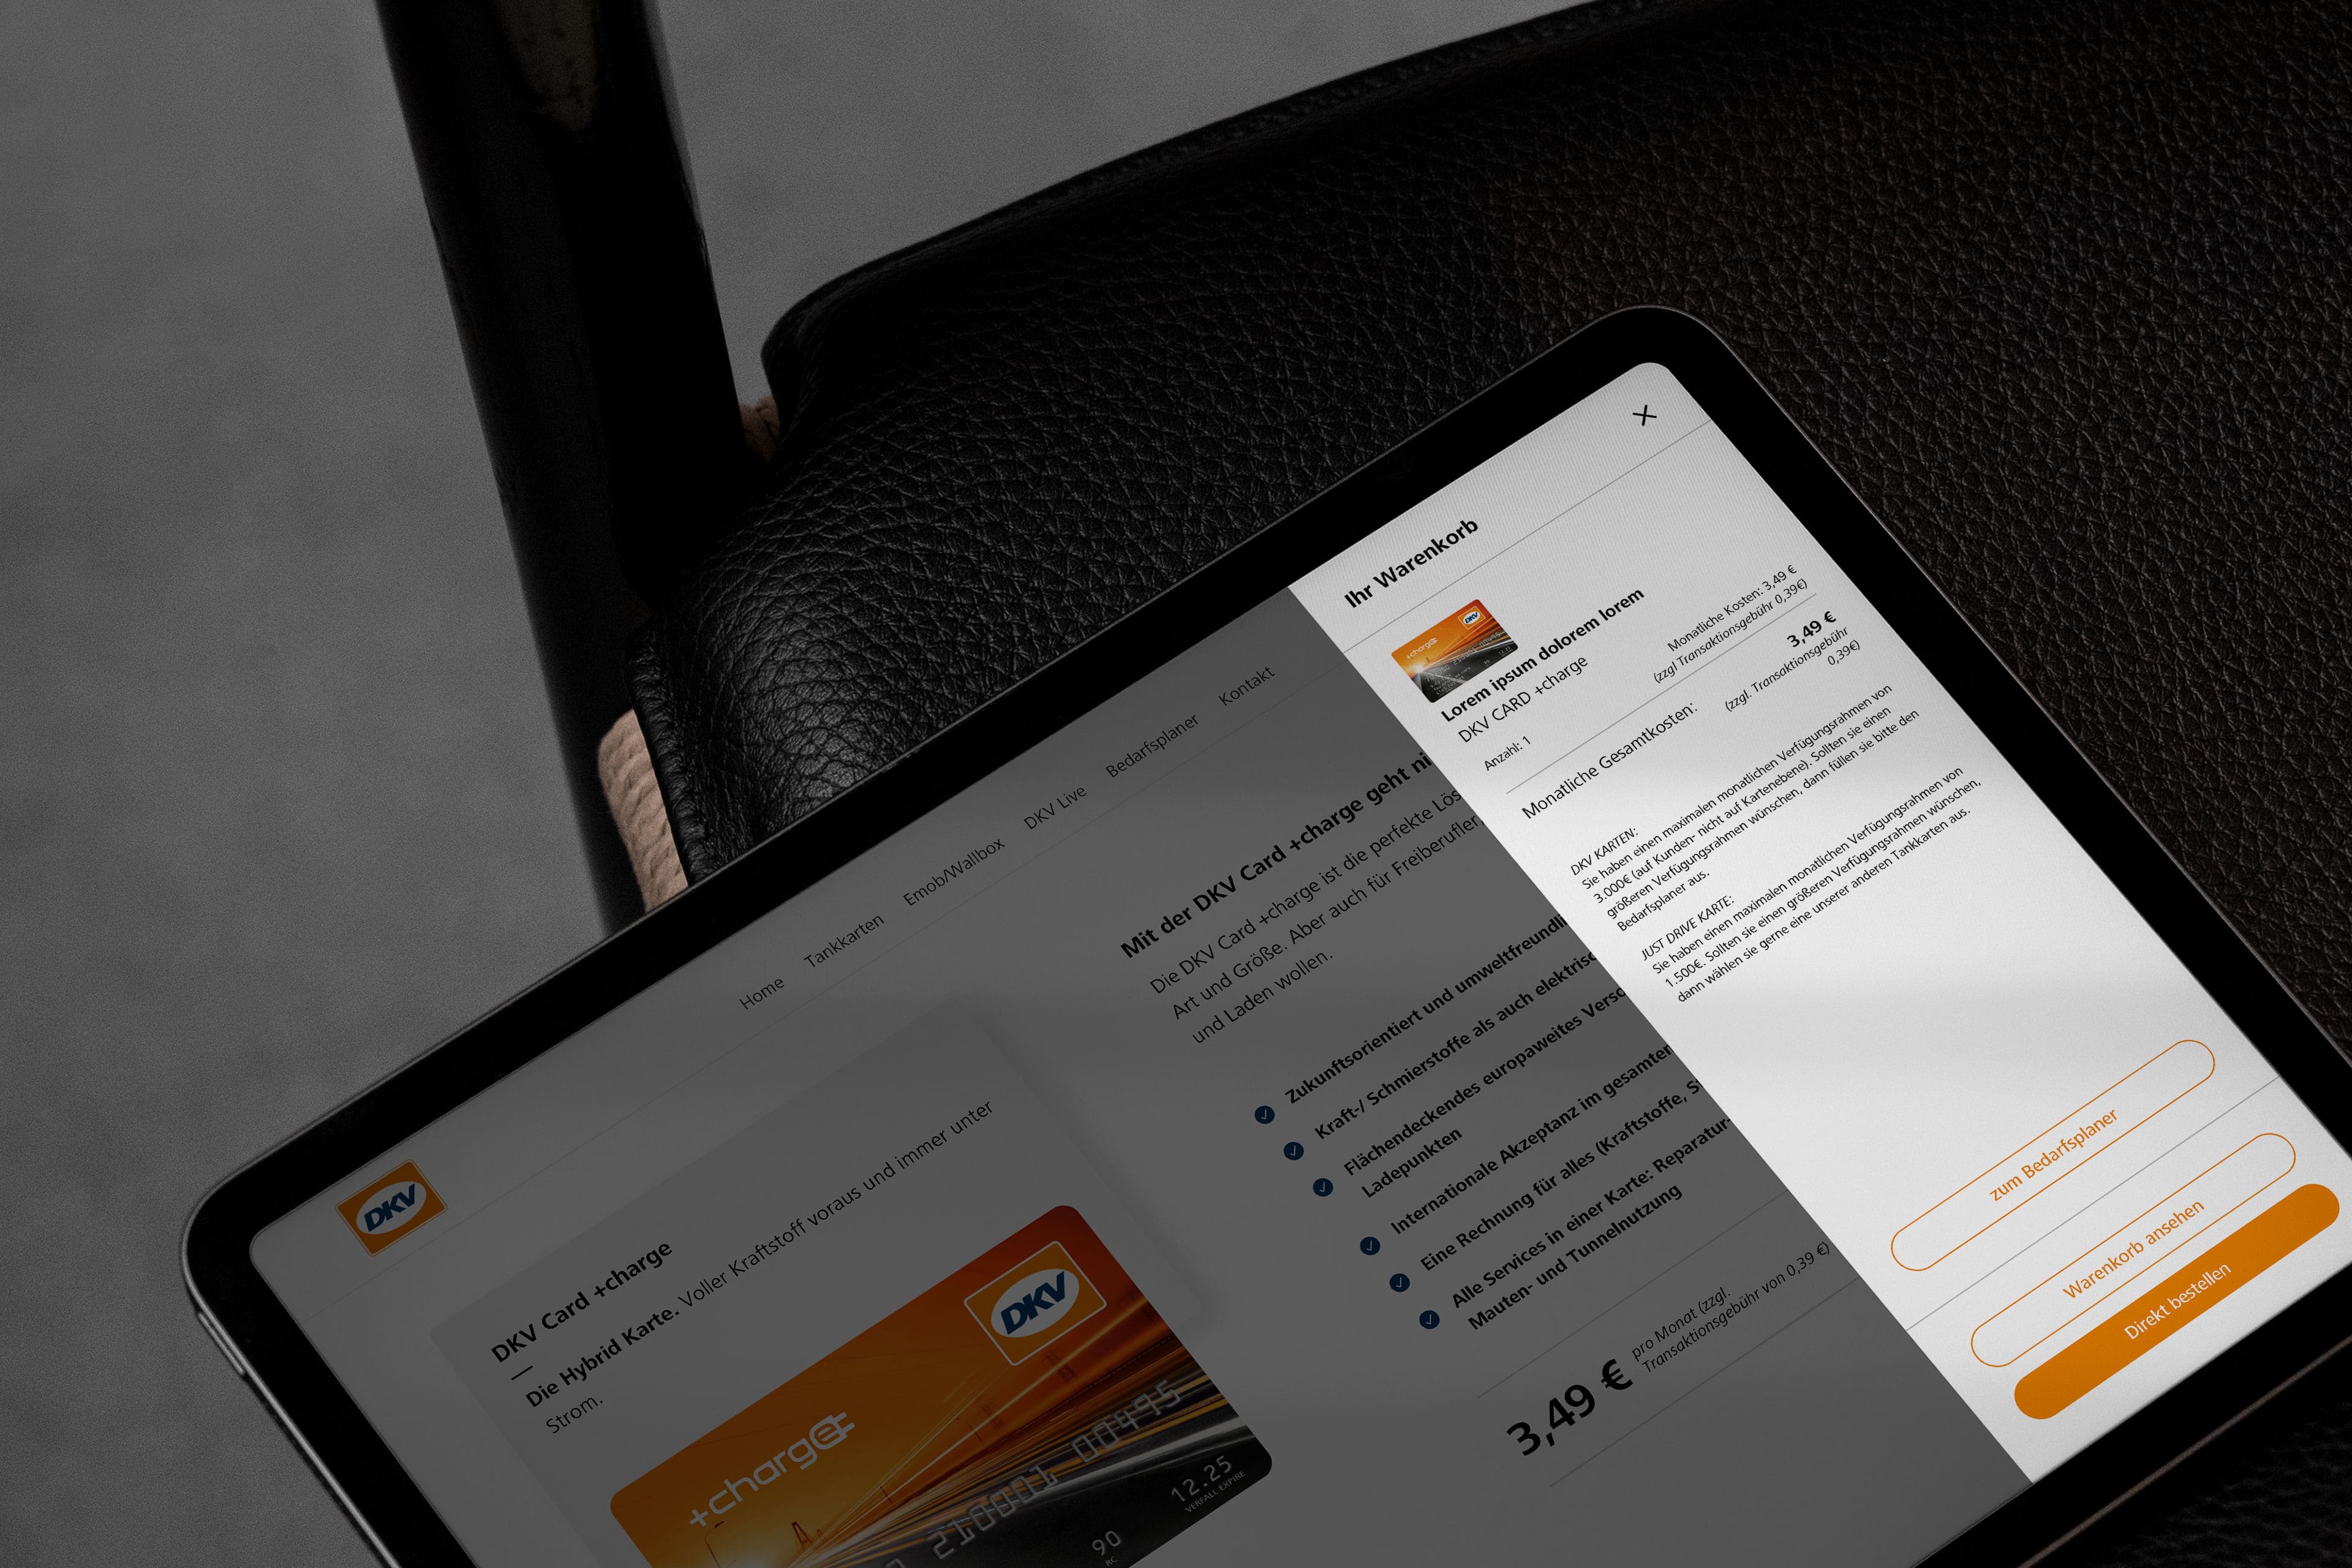 Ipad auf Stuhl. Bildschirm zeigt einen digitalen Warenkorb.